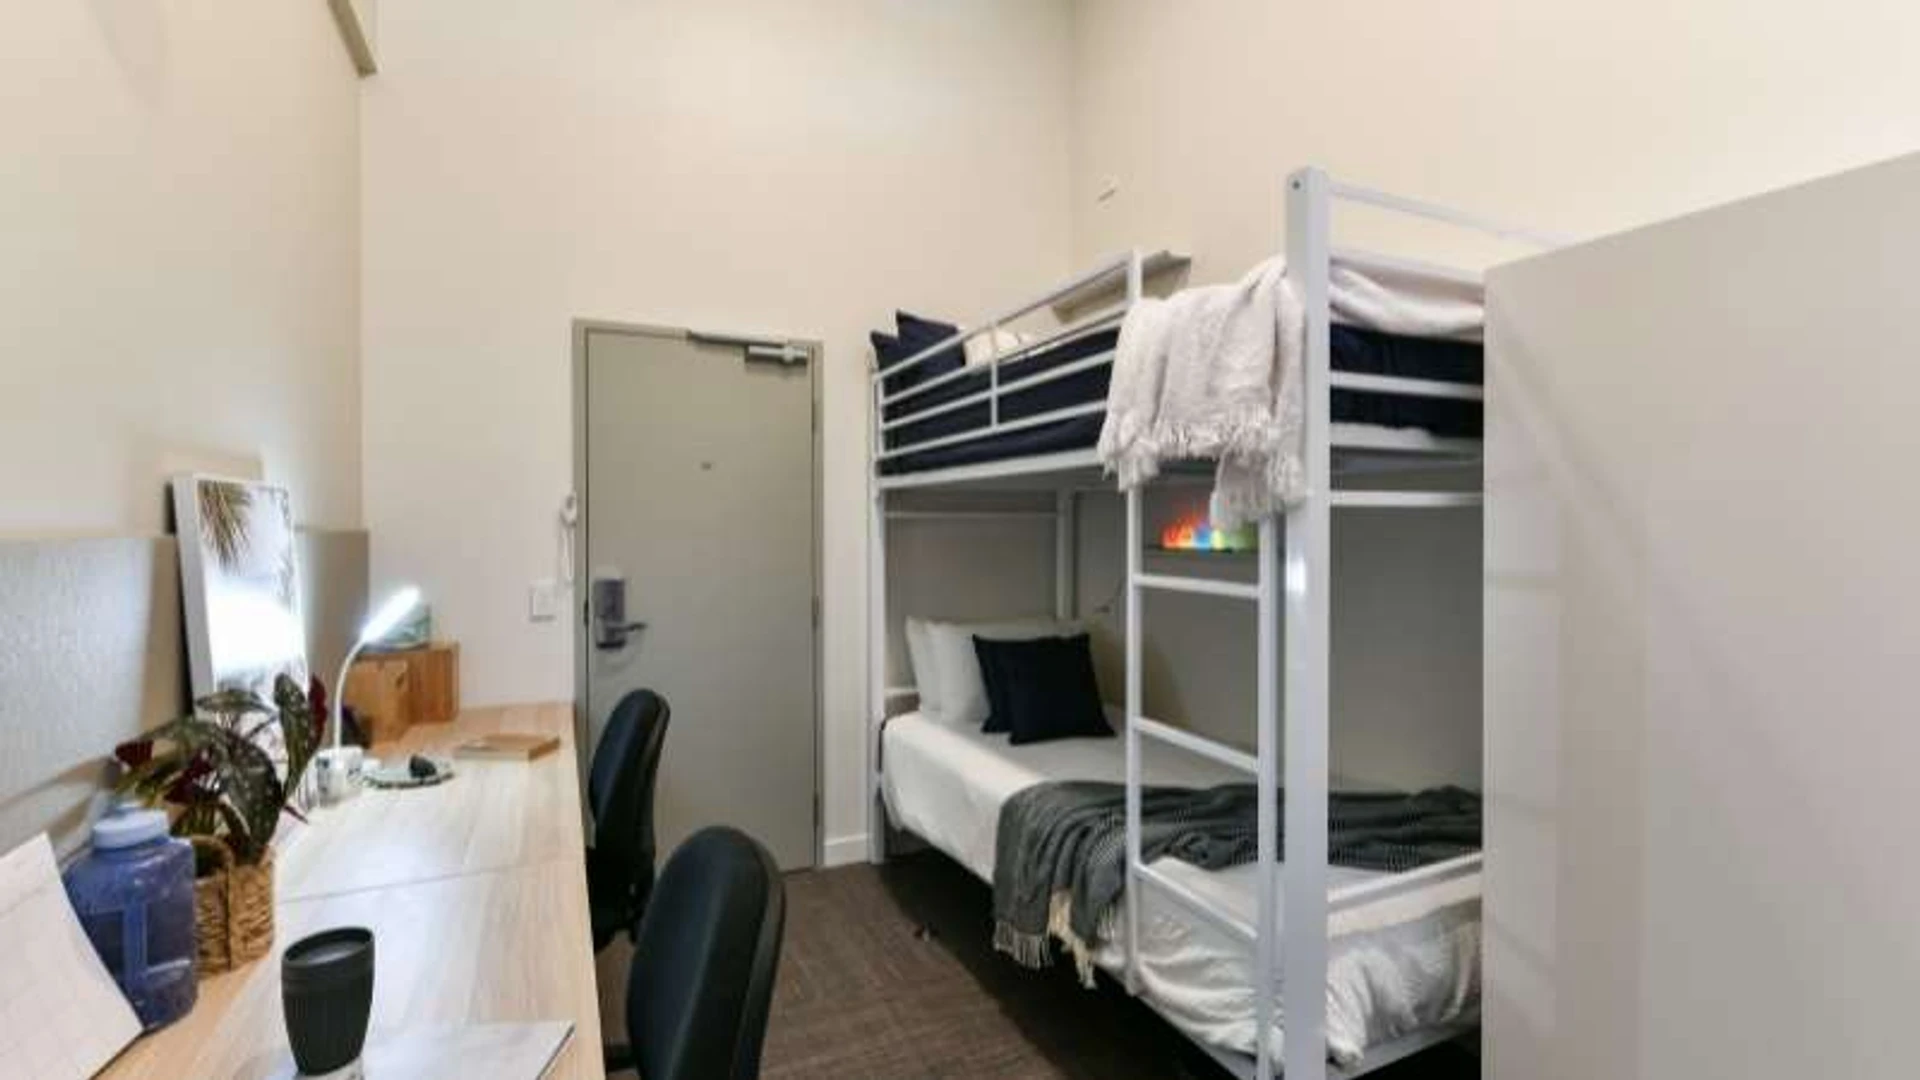 Shared room in 3-bedroom flat Brisbane